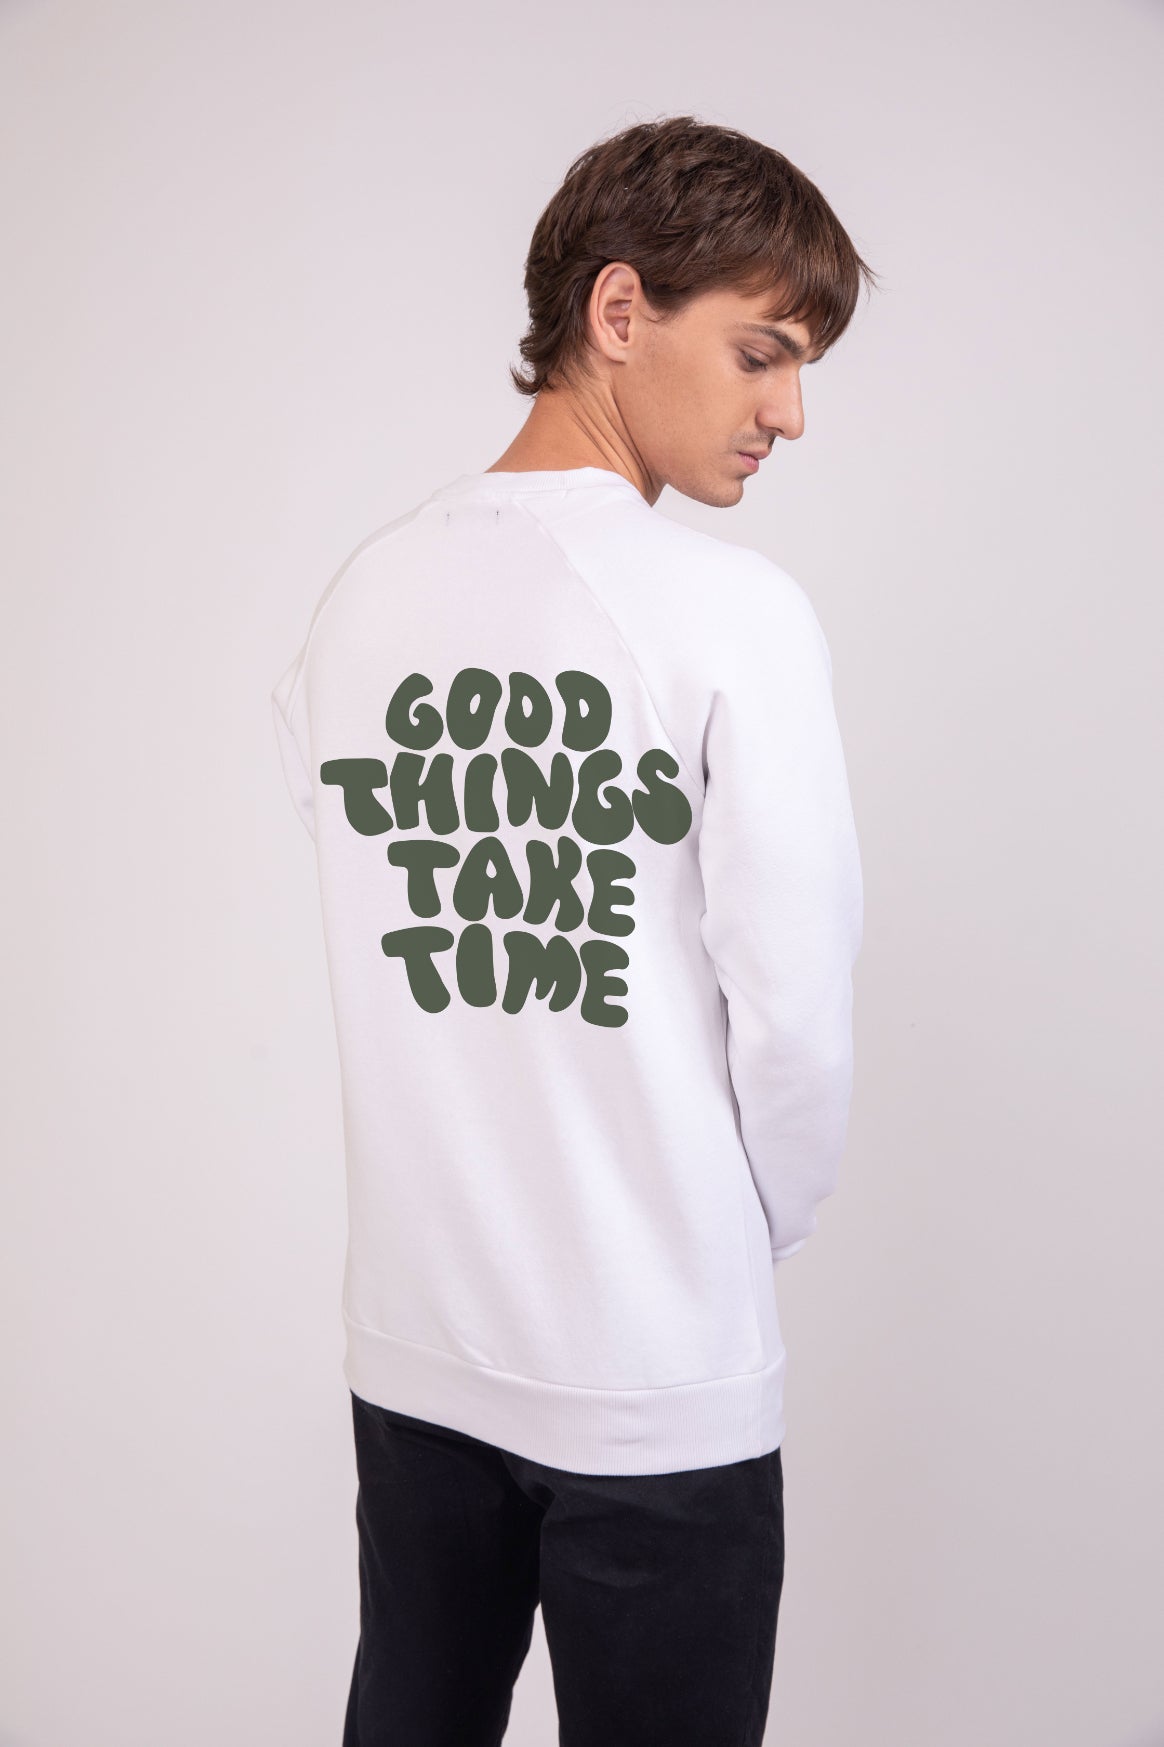 Good things takes time Radiant White - Printed Sweatshirt